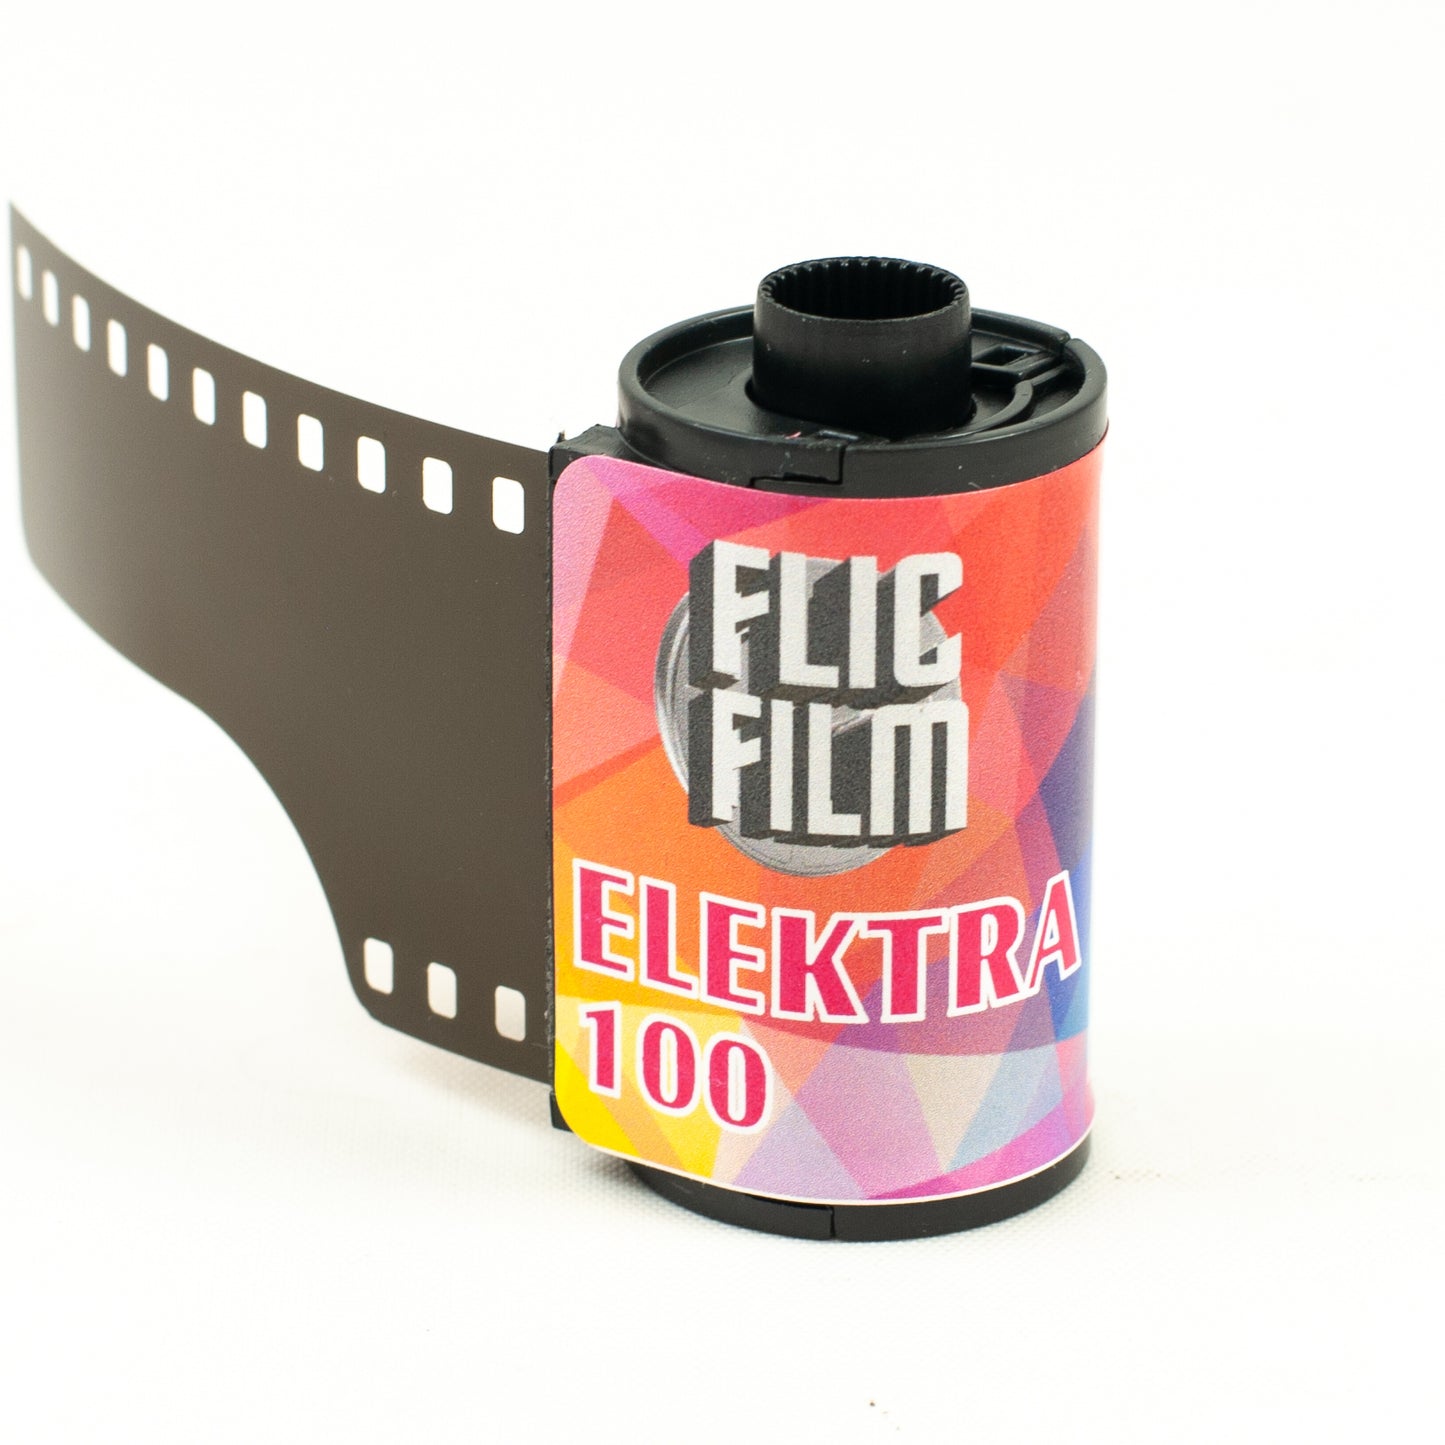 Flic Film Elektra 100 - 35mm, 36 exp.